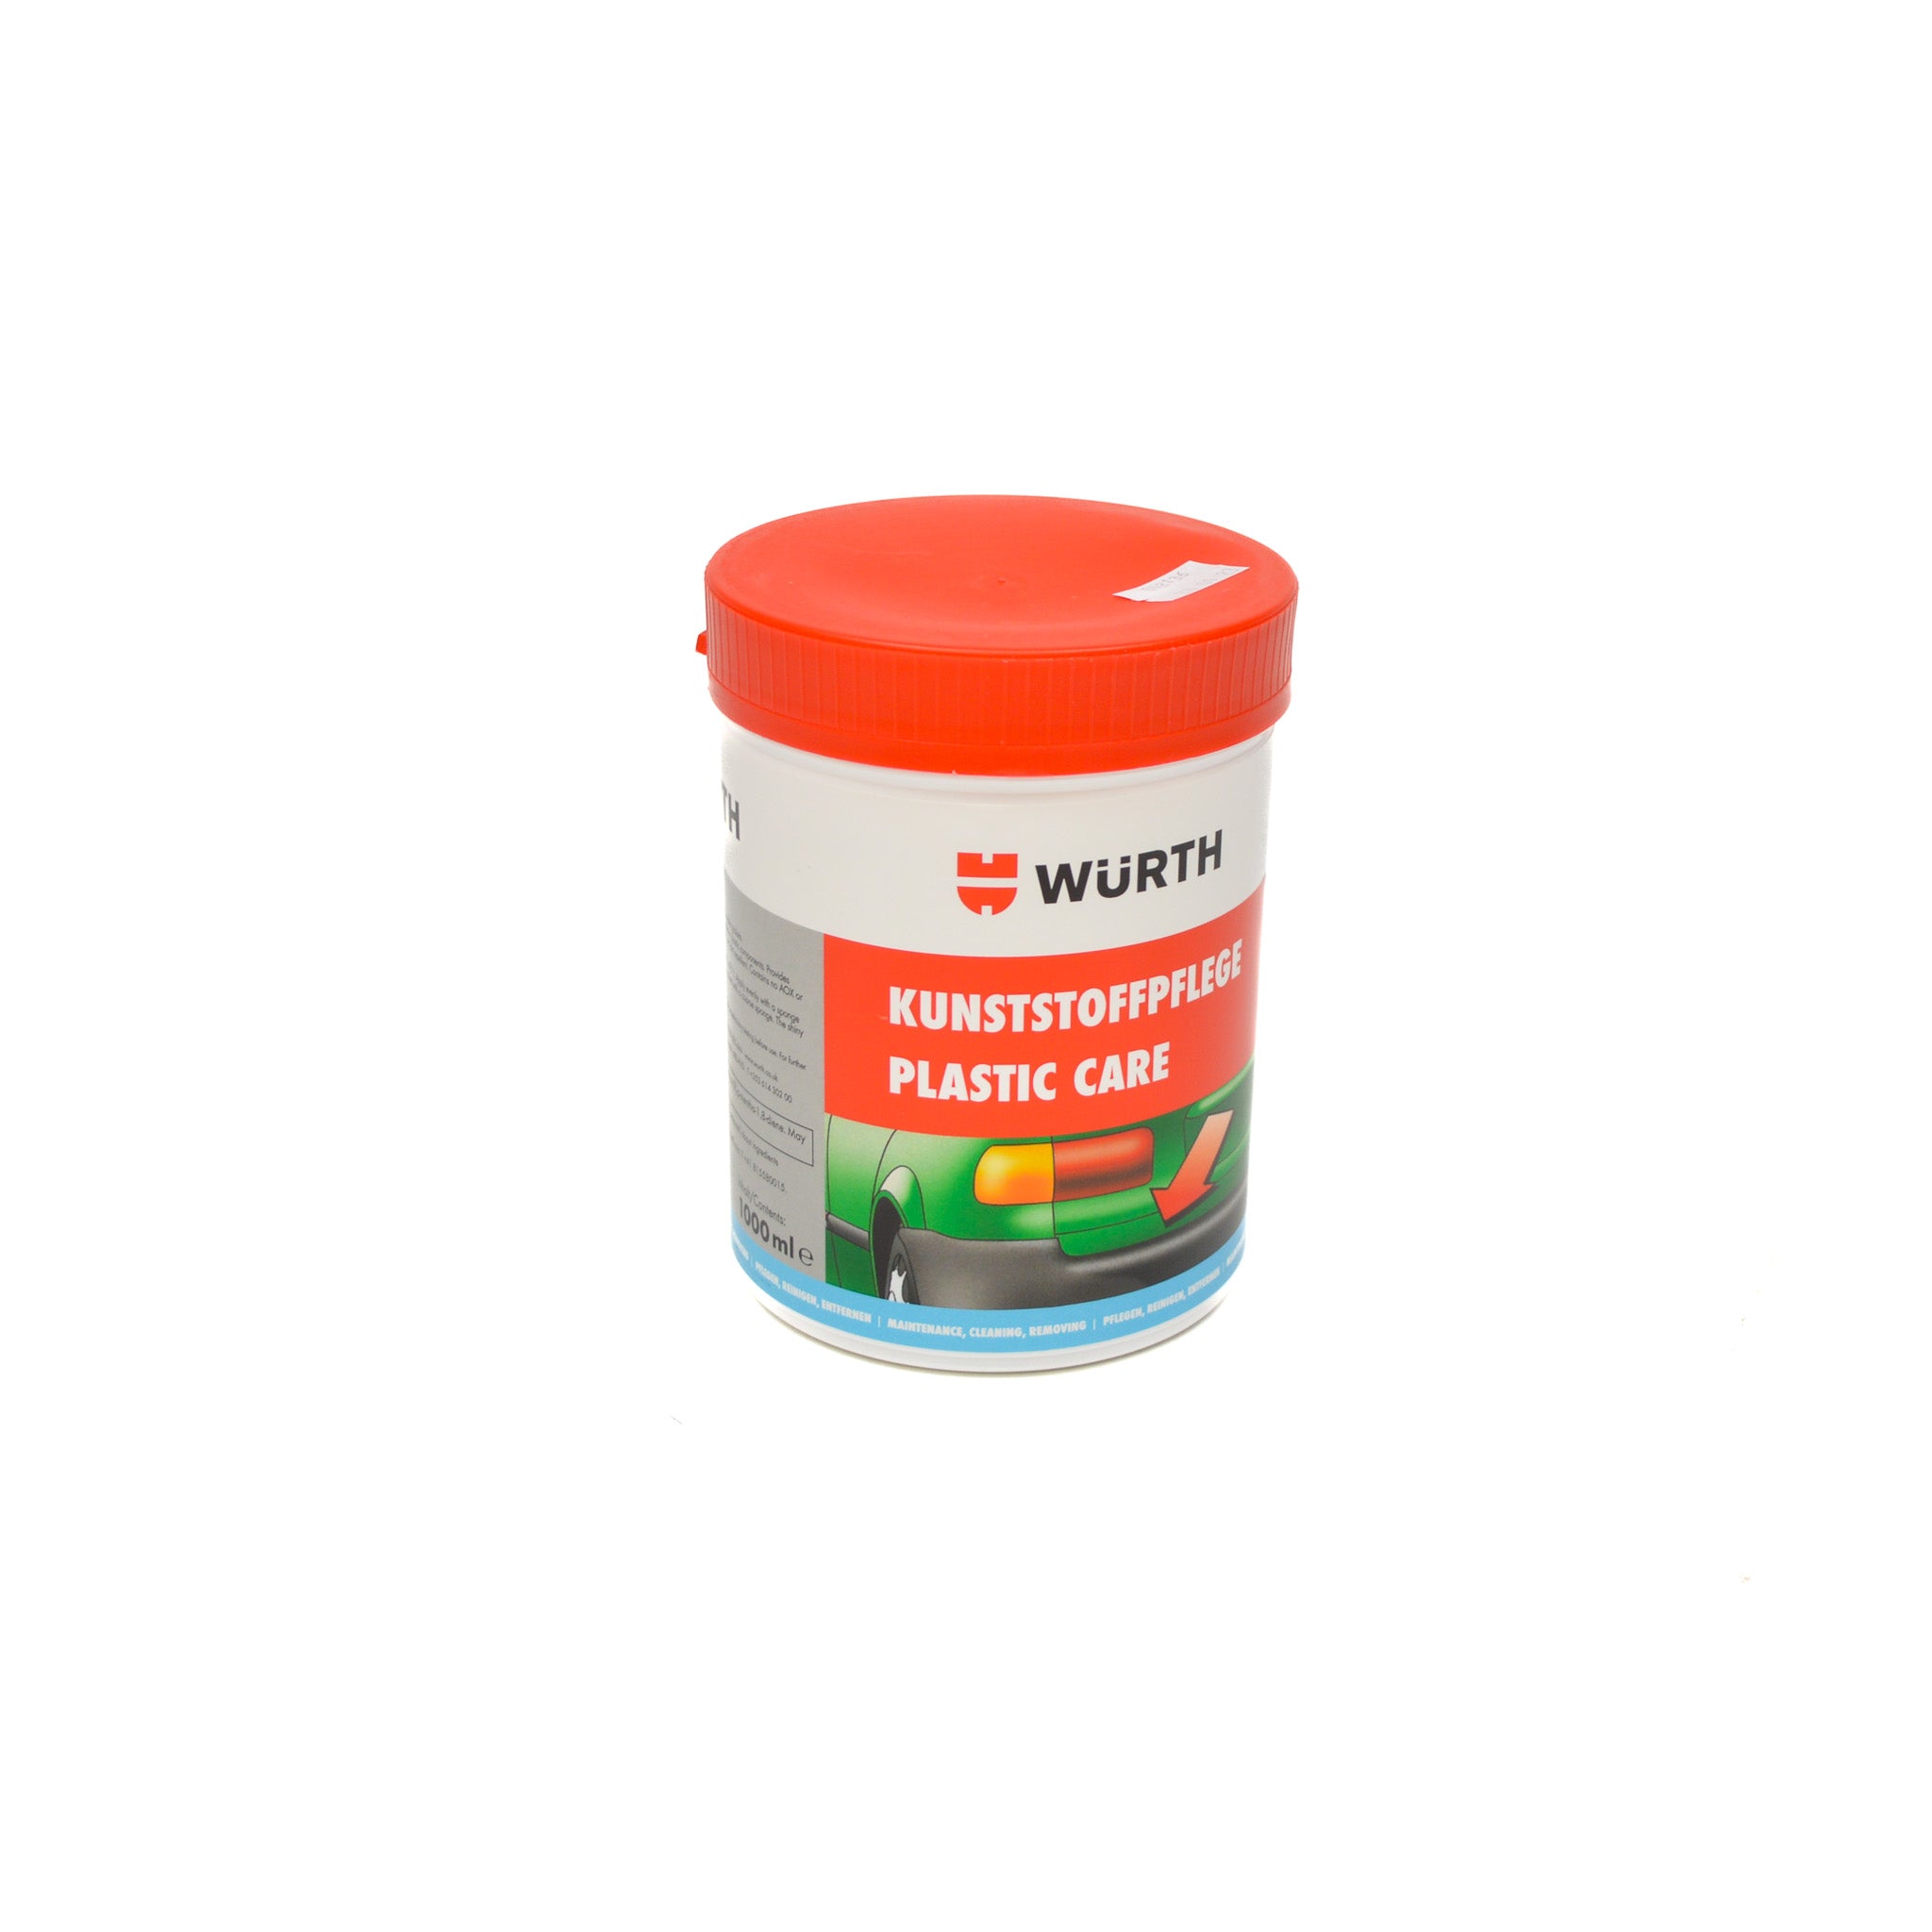 Würth professional plastic care, care wax paste wax 1000 ml, dirt-repellent